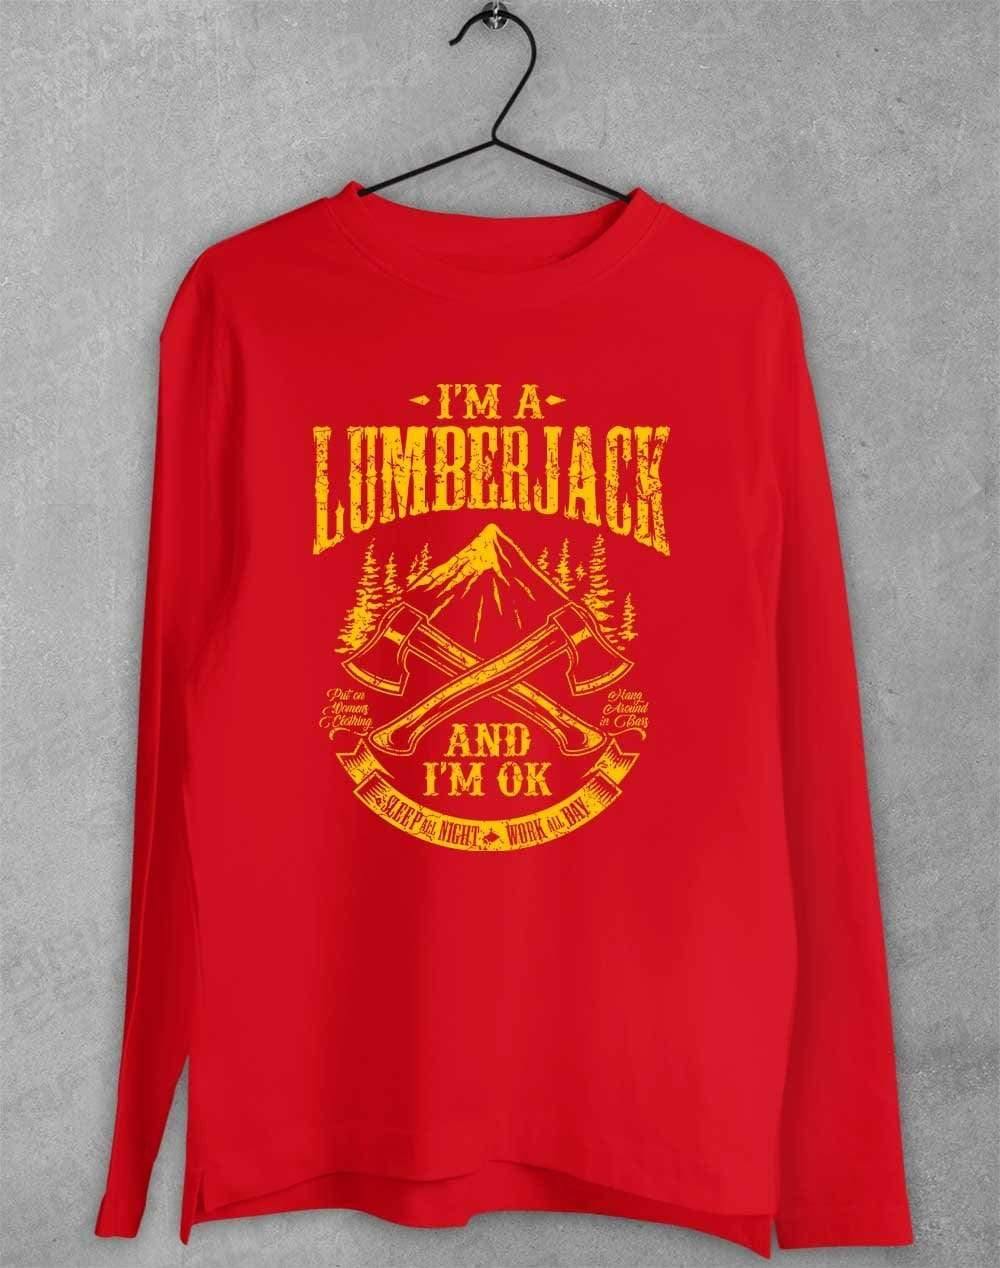 I'm a Lumberjack Long Sleeve T-Shirt S / Red  - Off World Tees